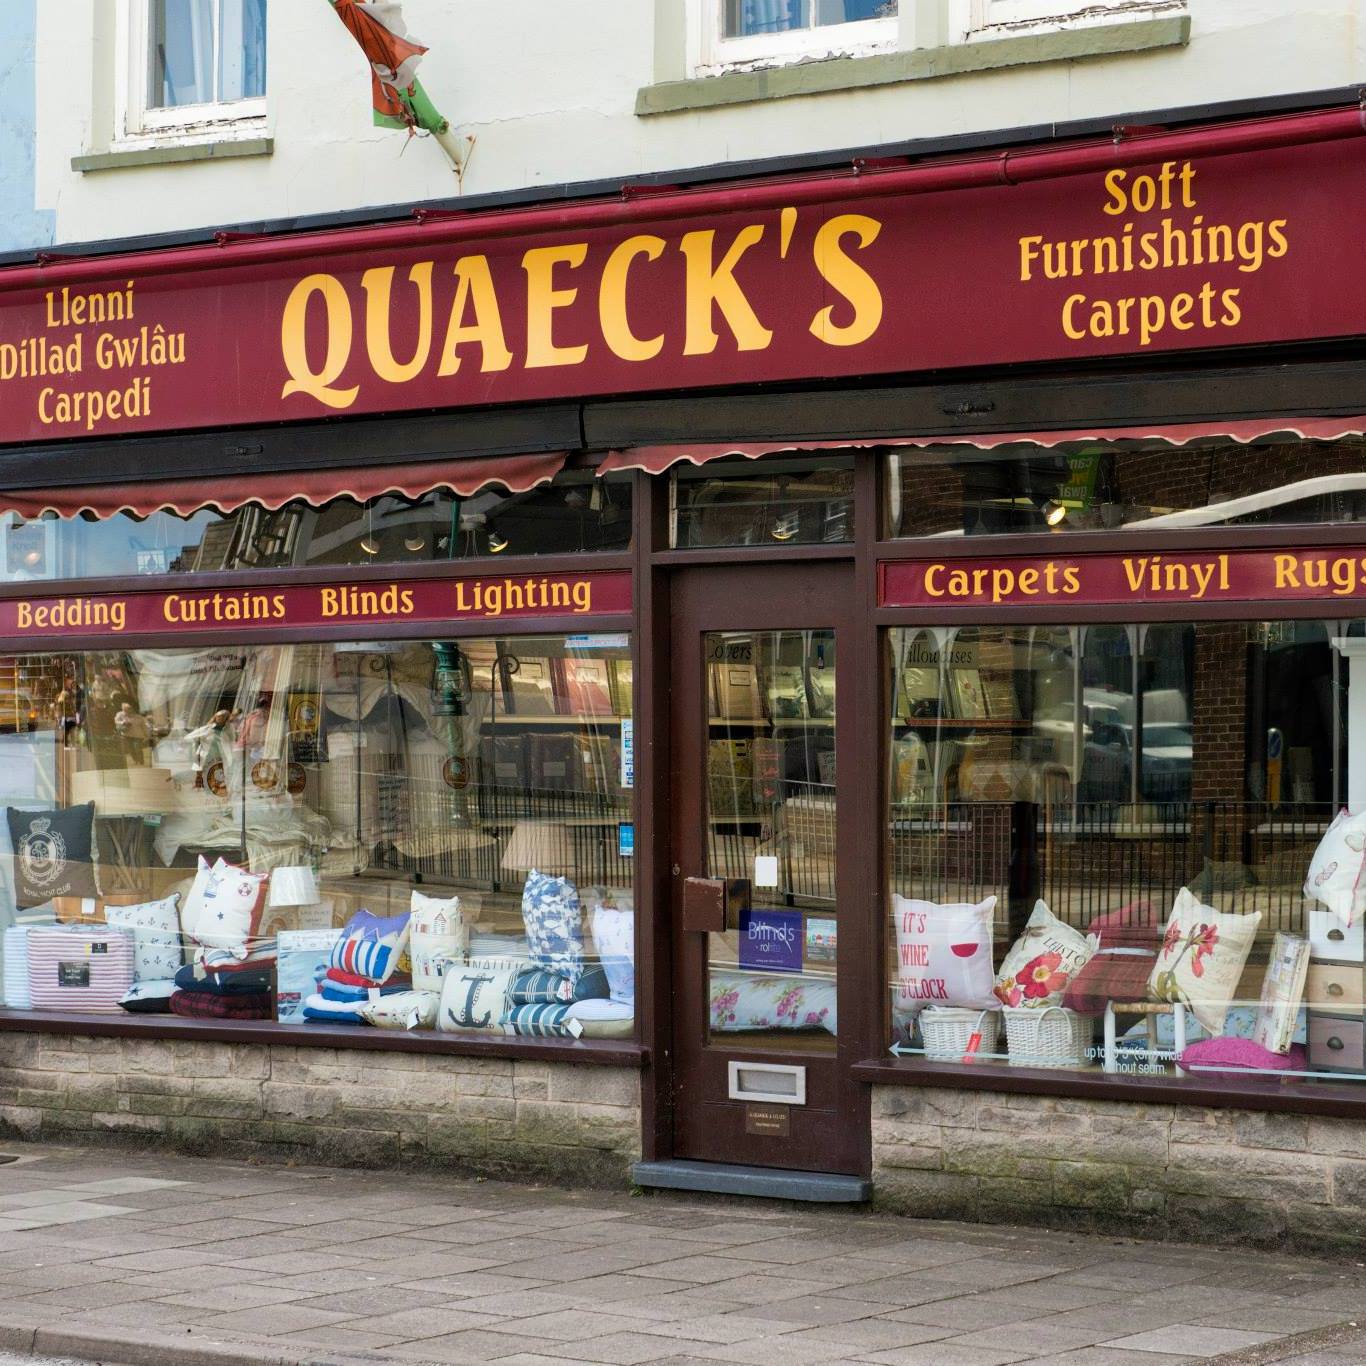 Quaeck's Furnishers 150 High Street Porthmadog Shop Window